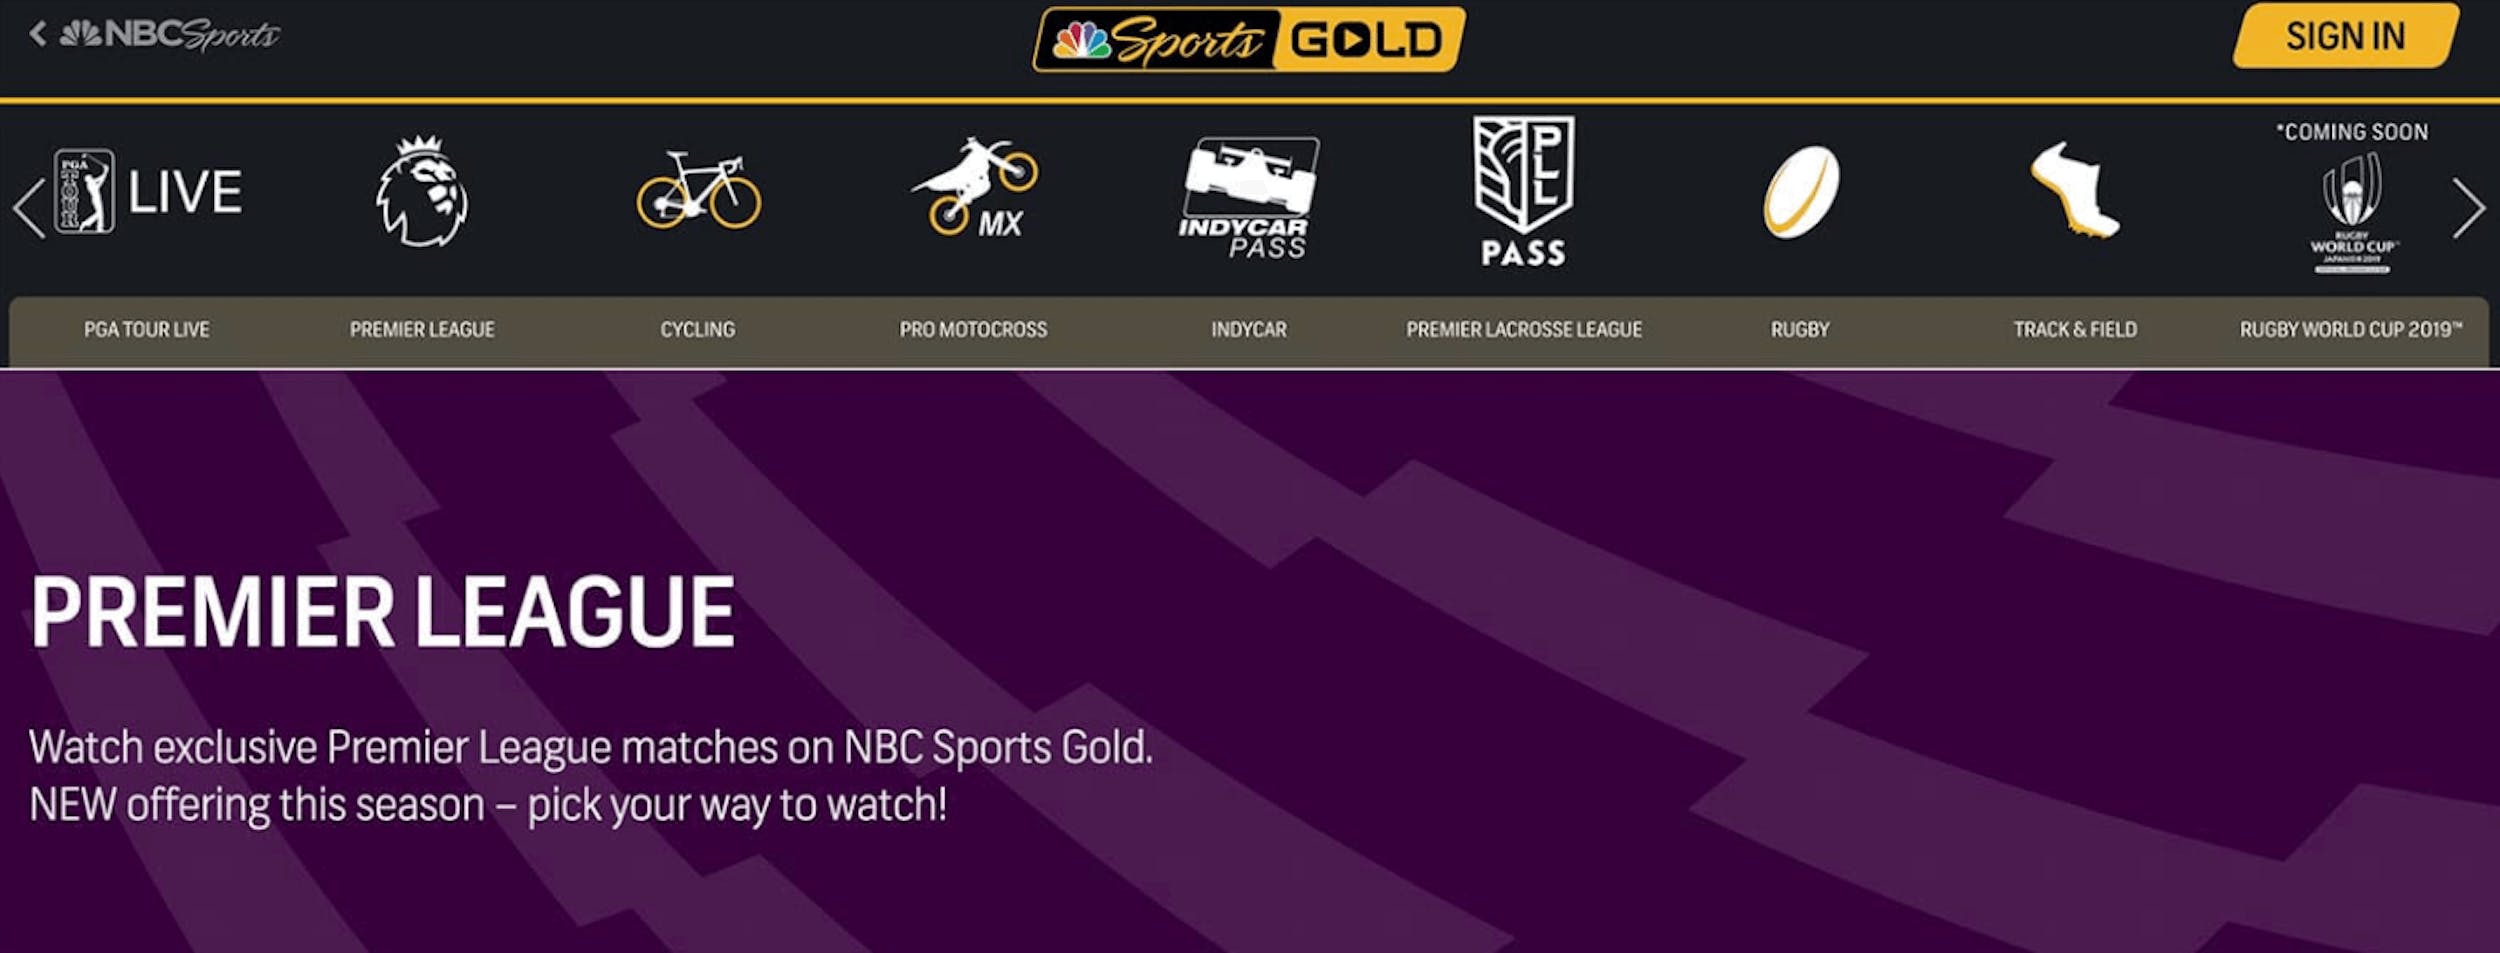 liverpool vs everton live stream nbc sports gold